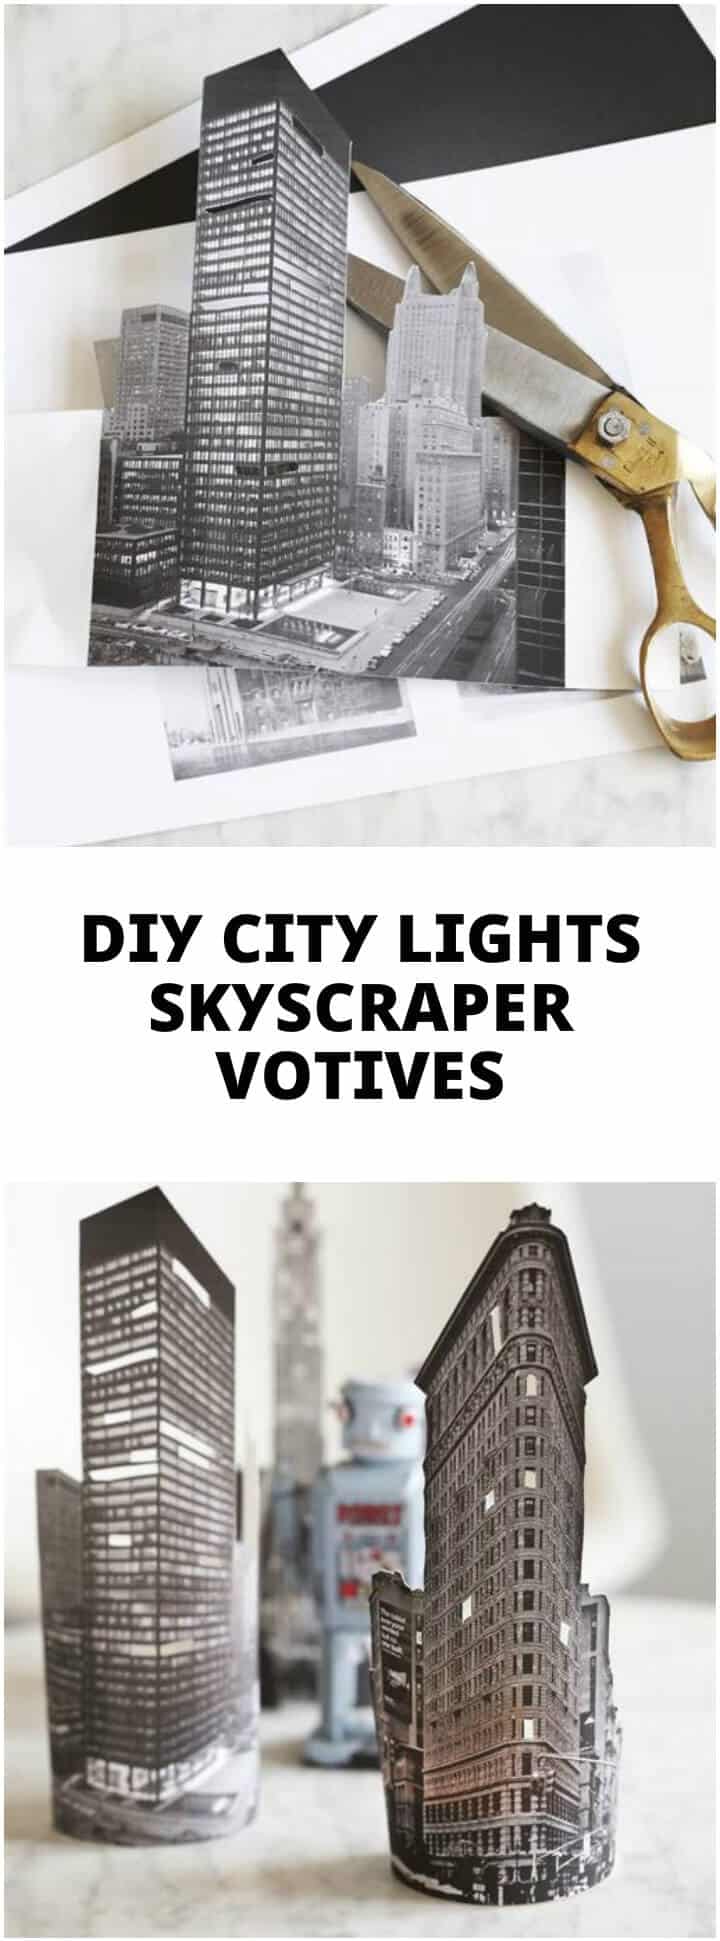 easy city lights rascacielos votivas